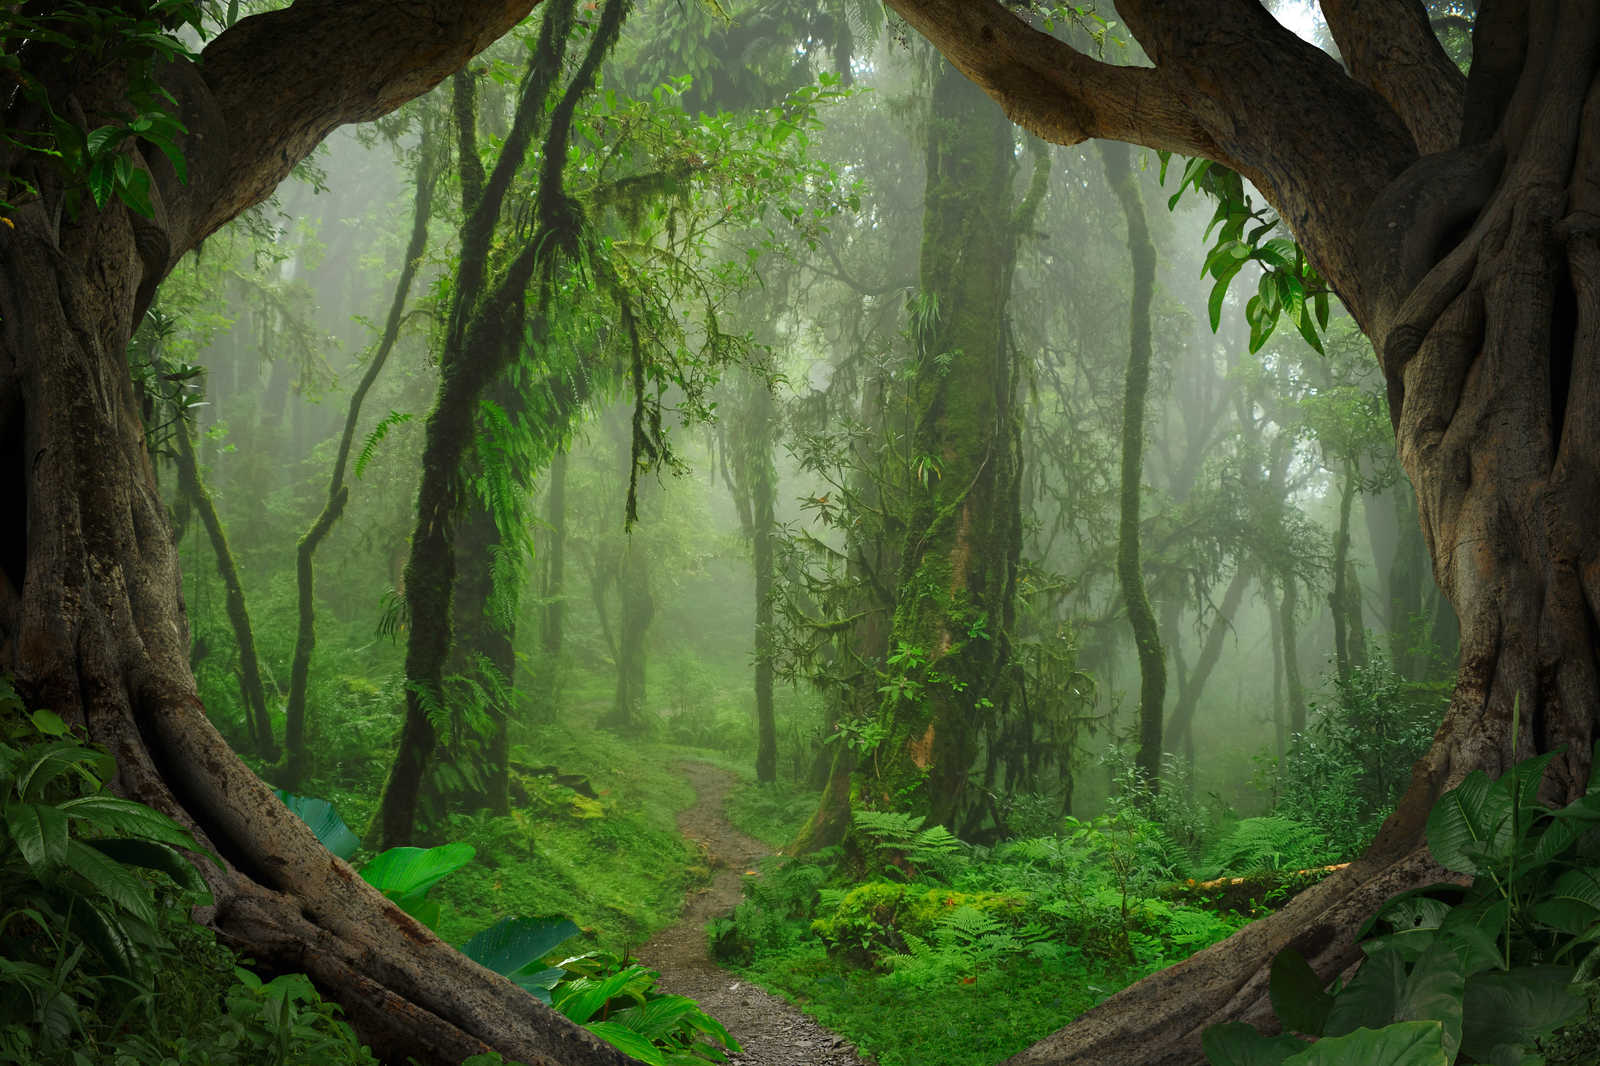             Magische Tropenwald Leinwand – 0,90 m x 0,60 m
        